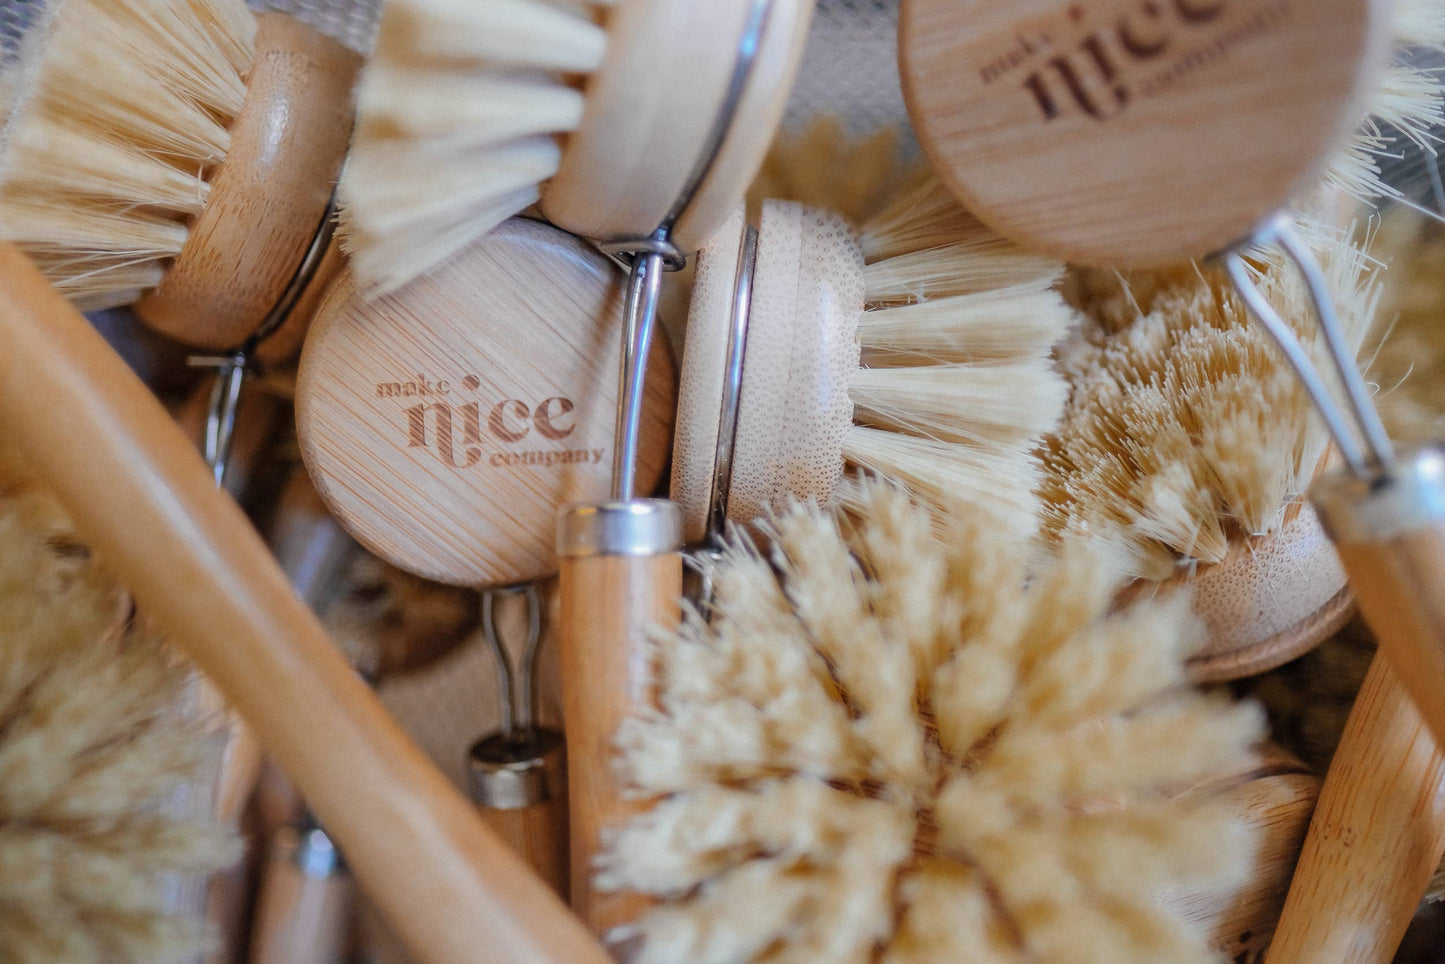 Make Nice Company - Dish Brush